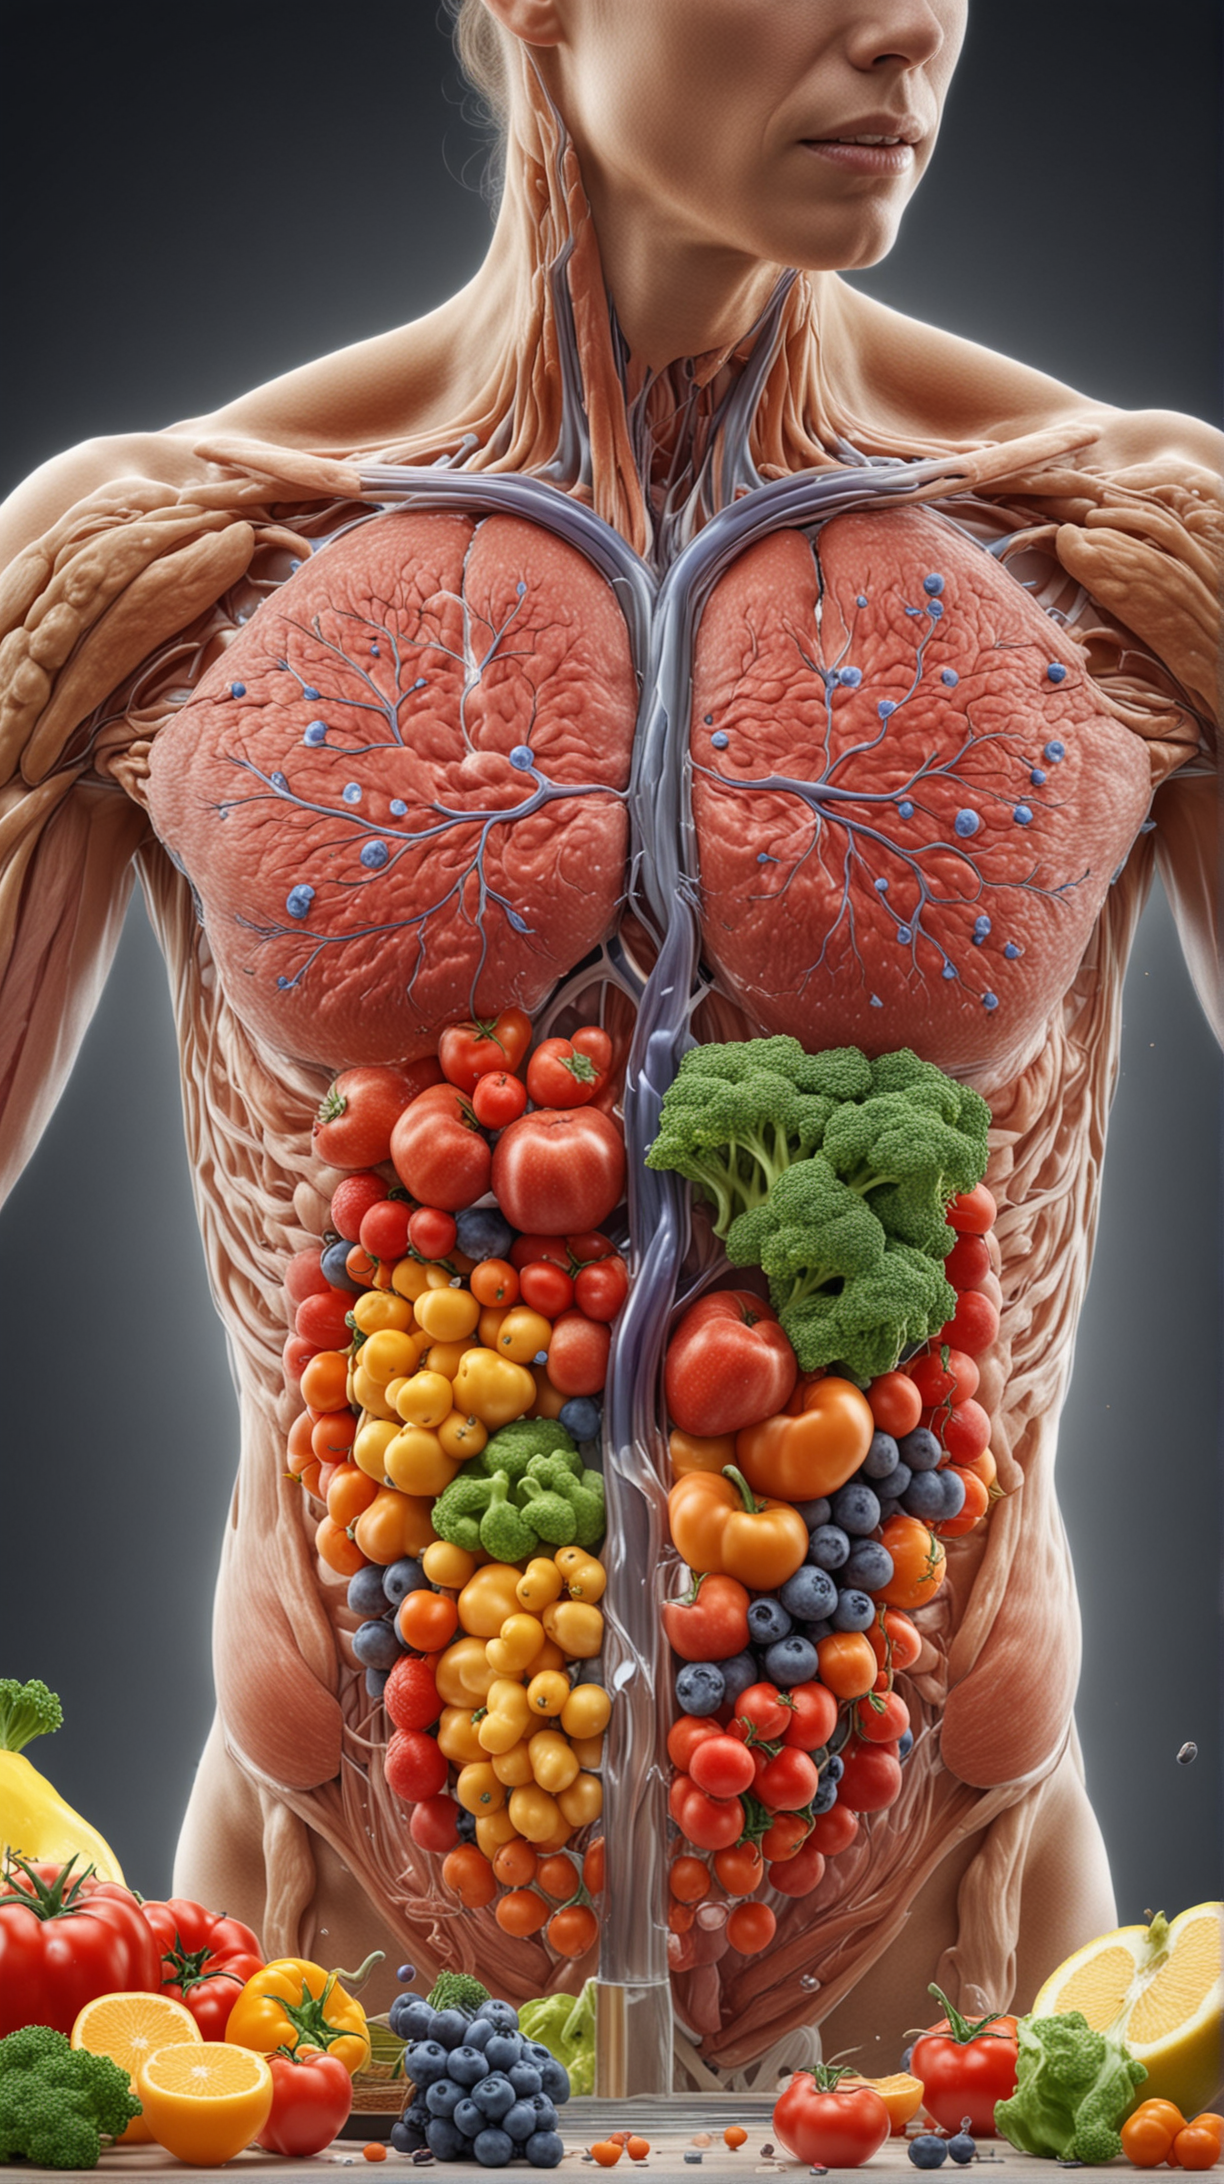 Body Absorbing Nutrients Scientific Illustration in 4K HDR